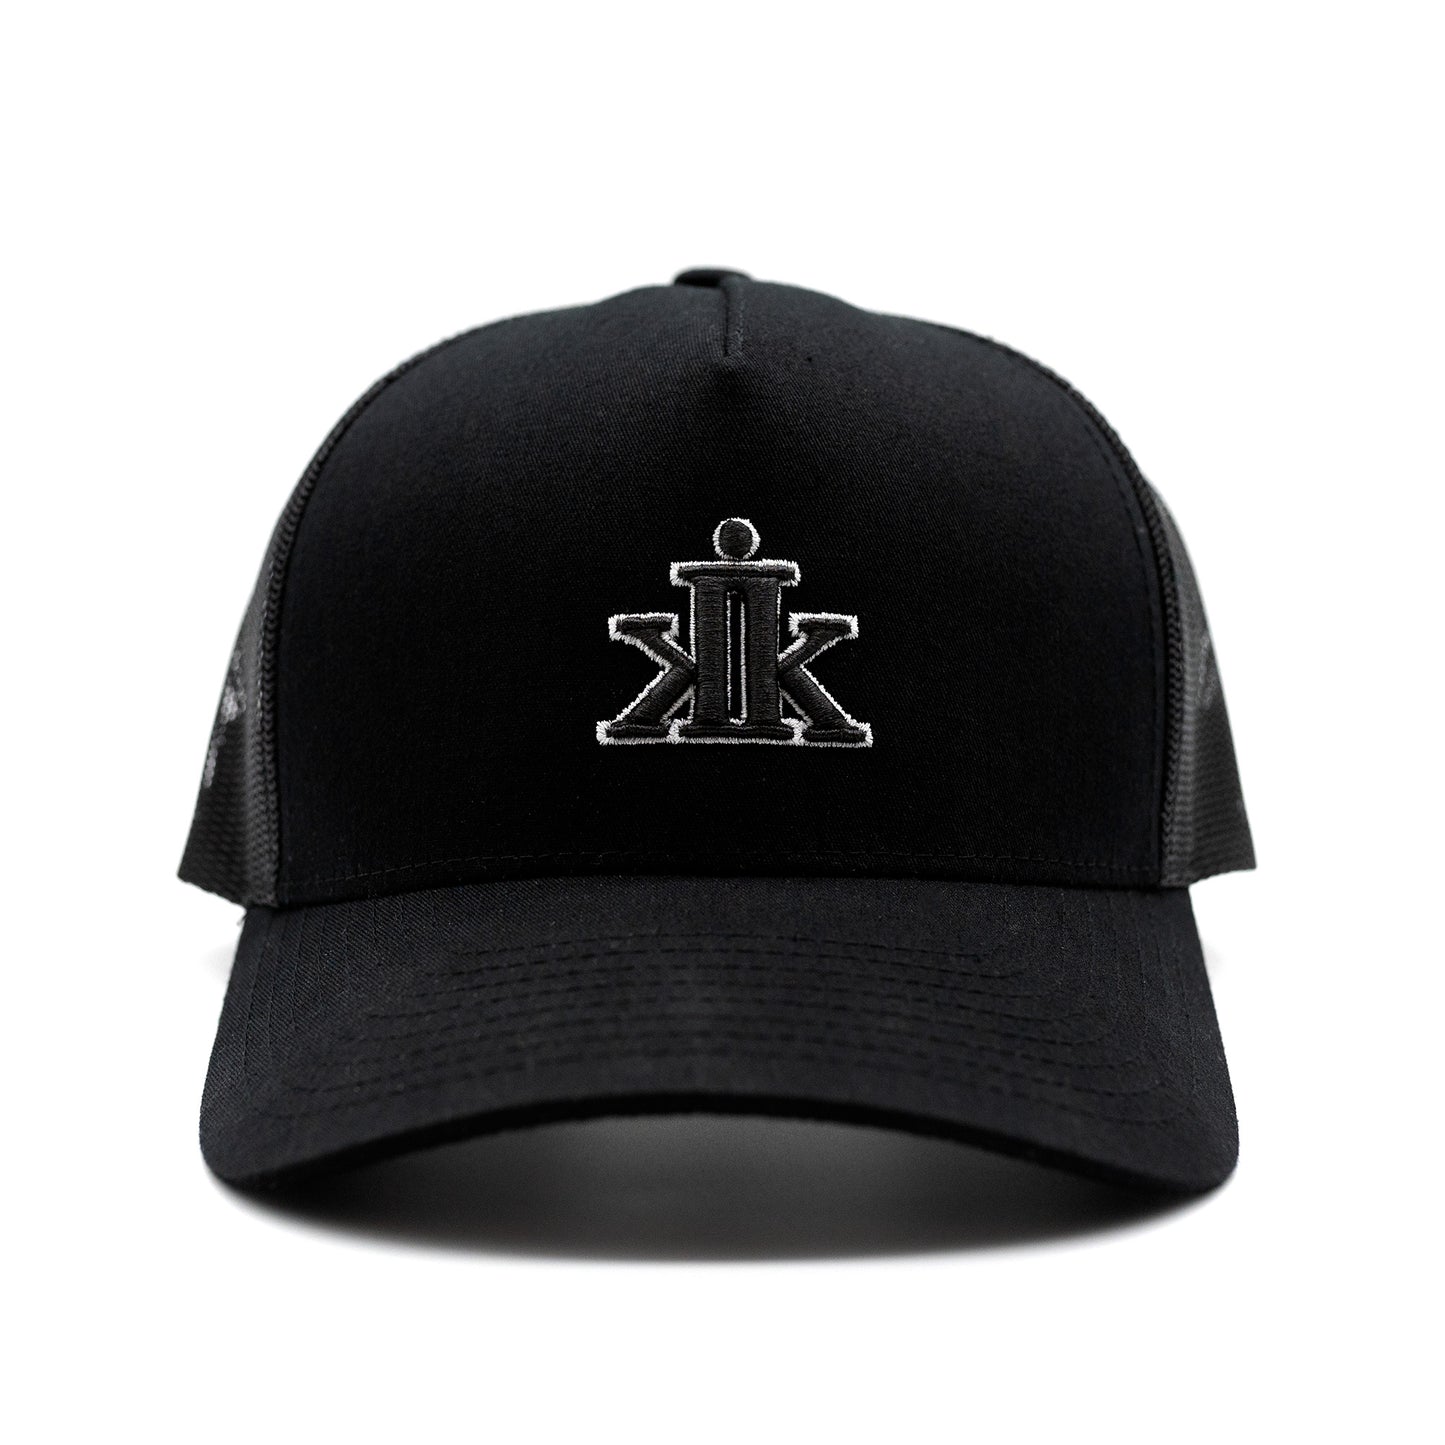 IKDI Trucker Hat / Black - IKendoit.Shop